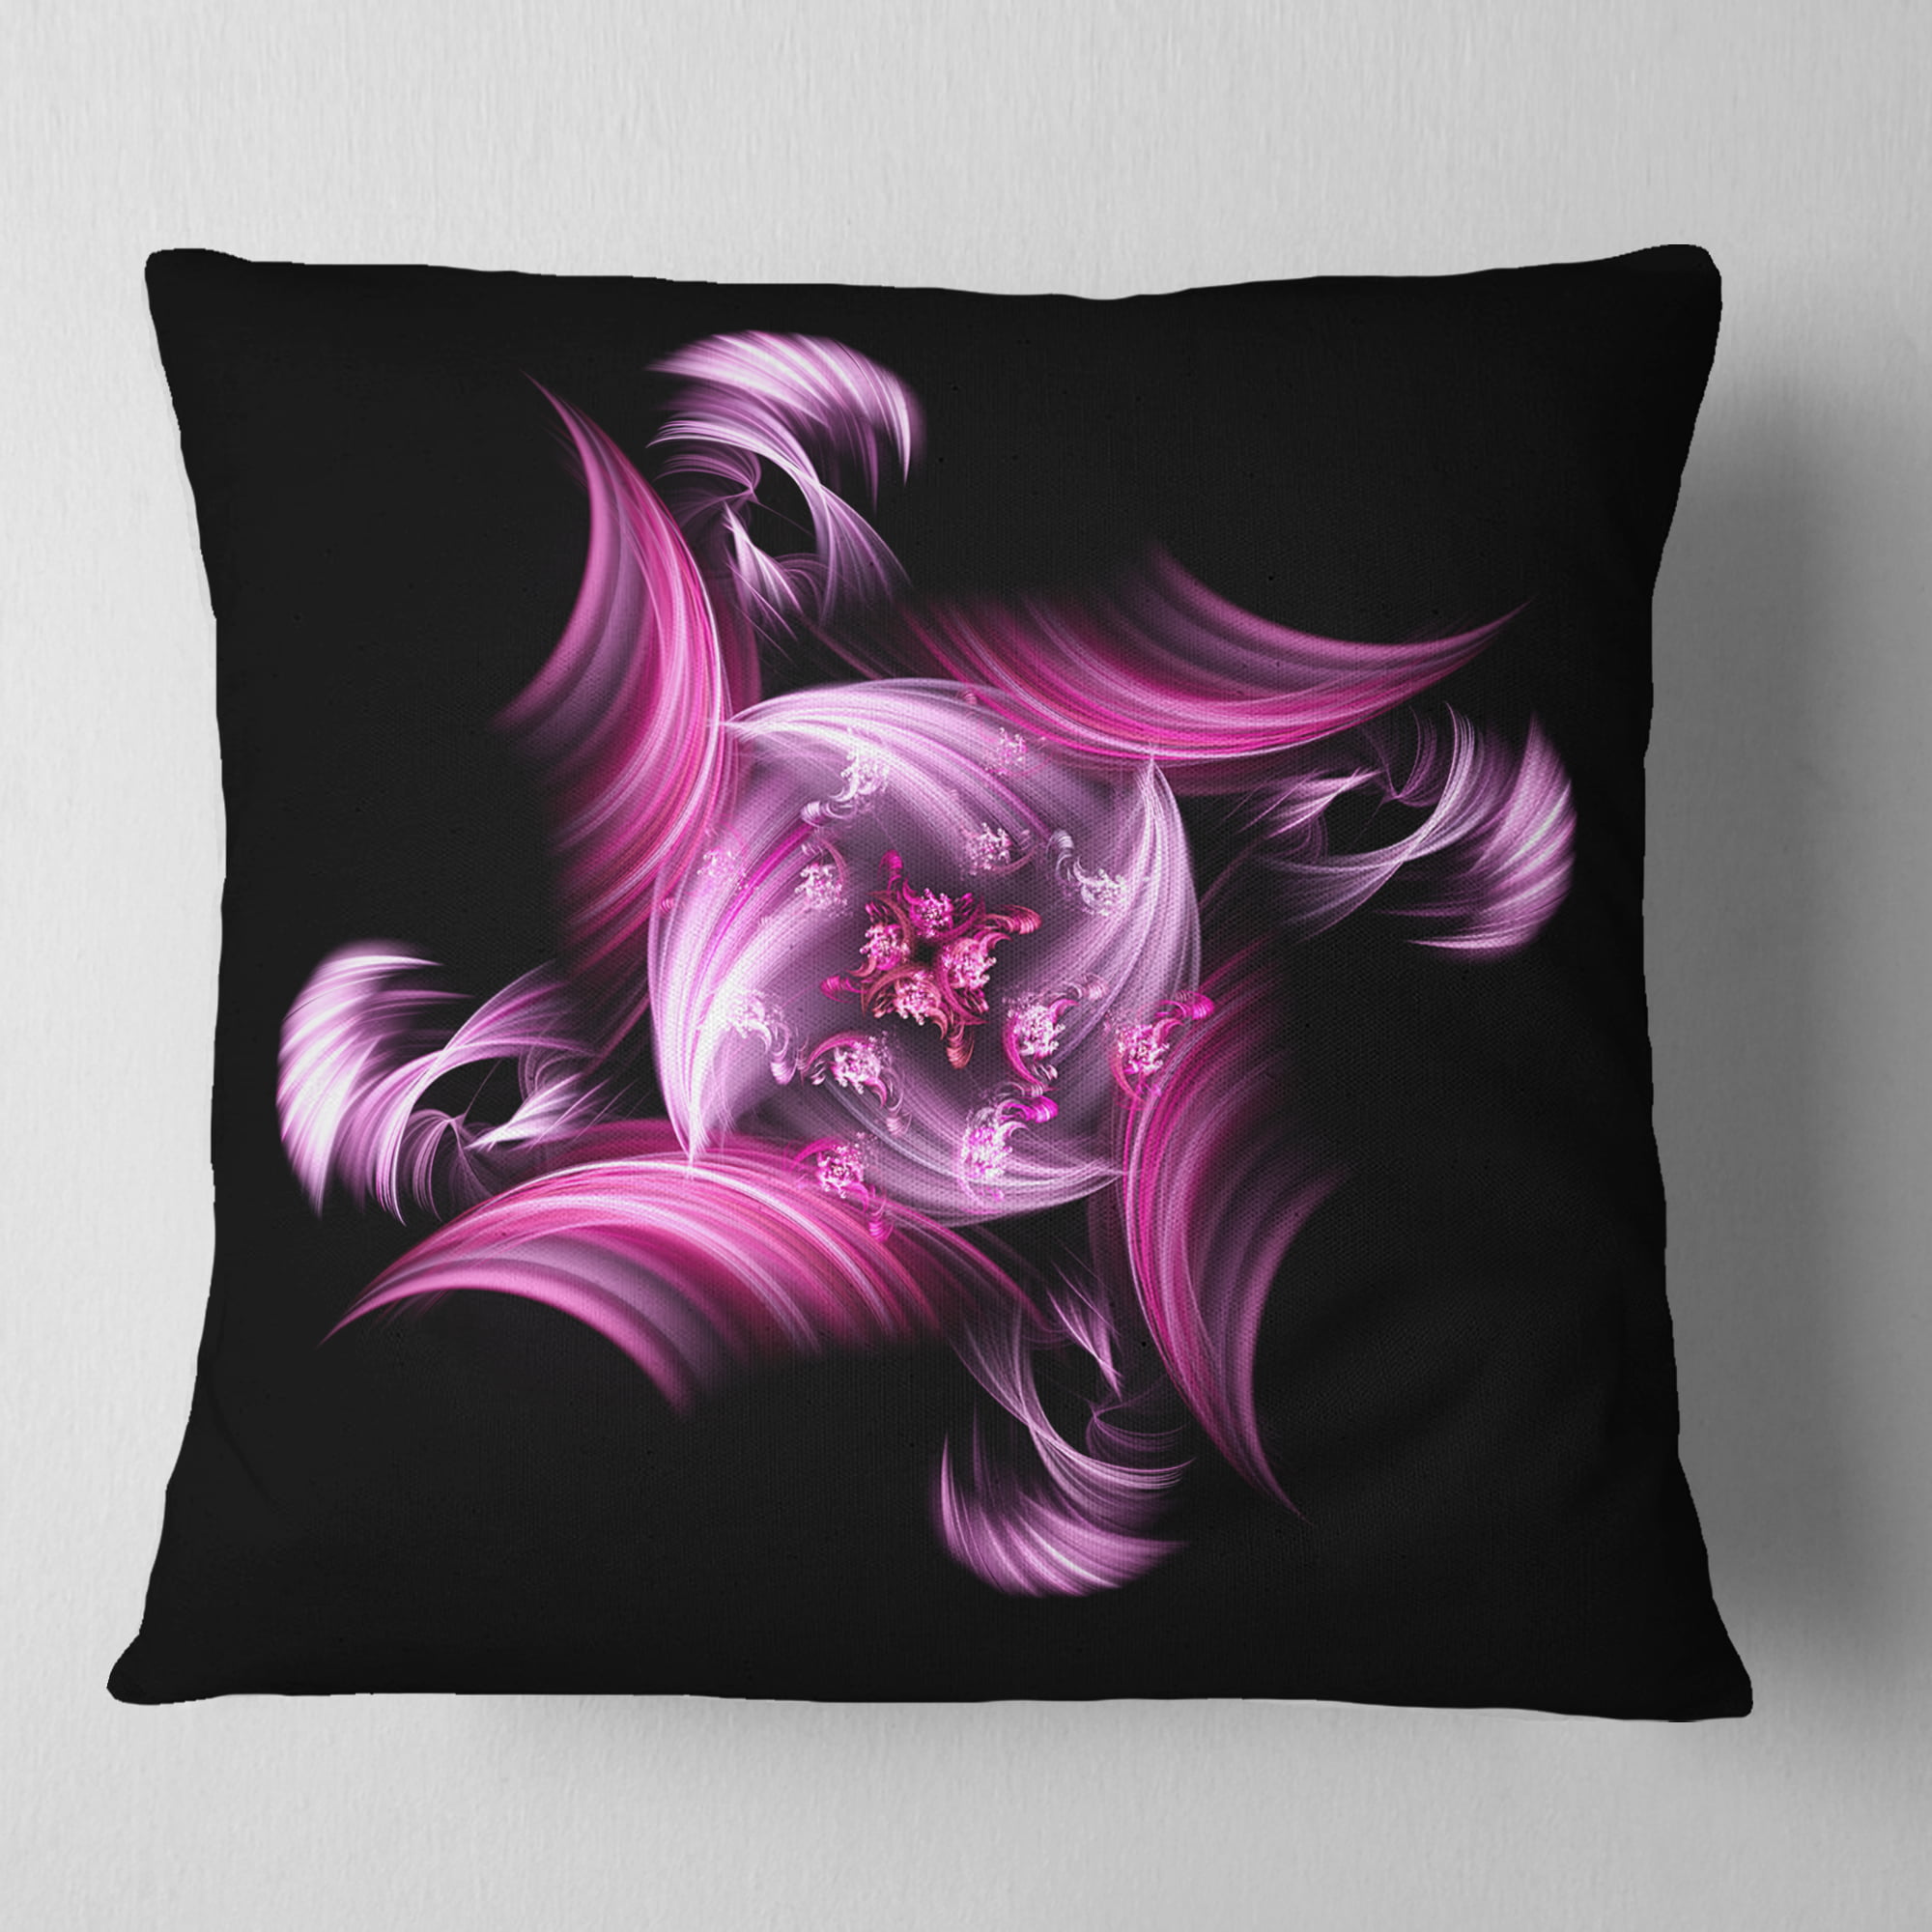 Small World Pillow – Spinning Mandalas™